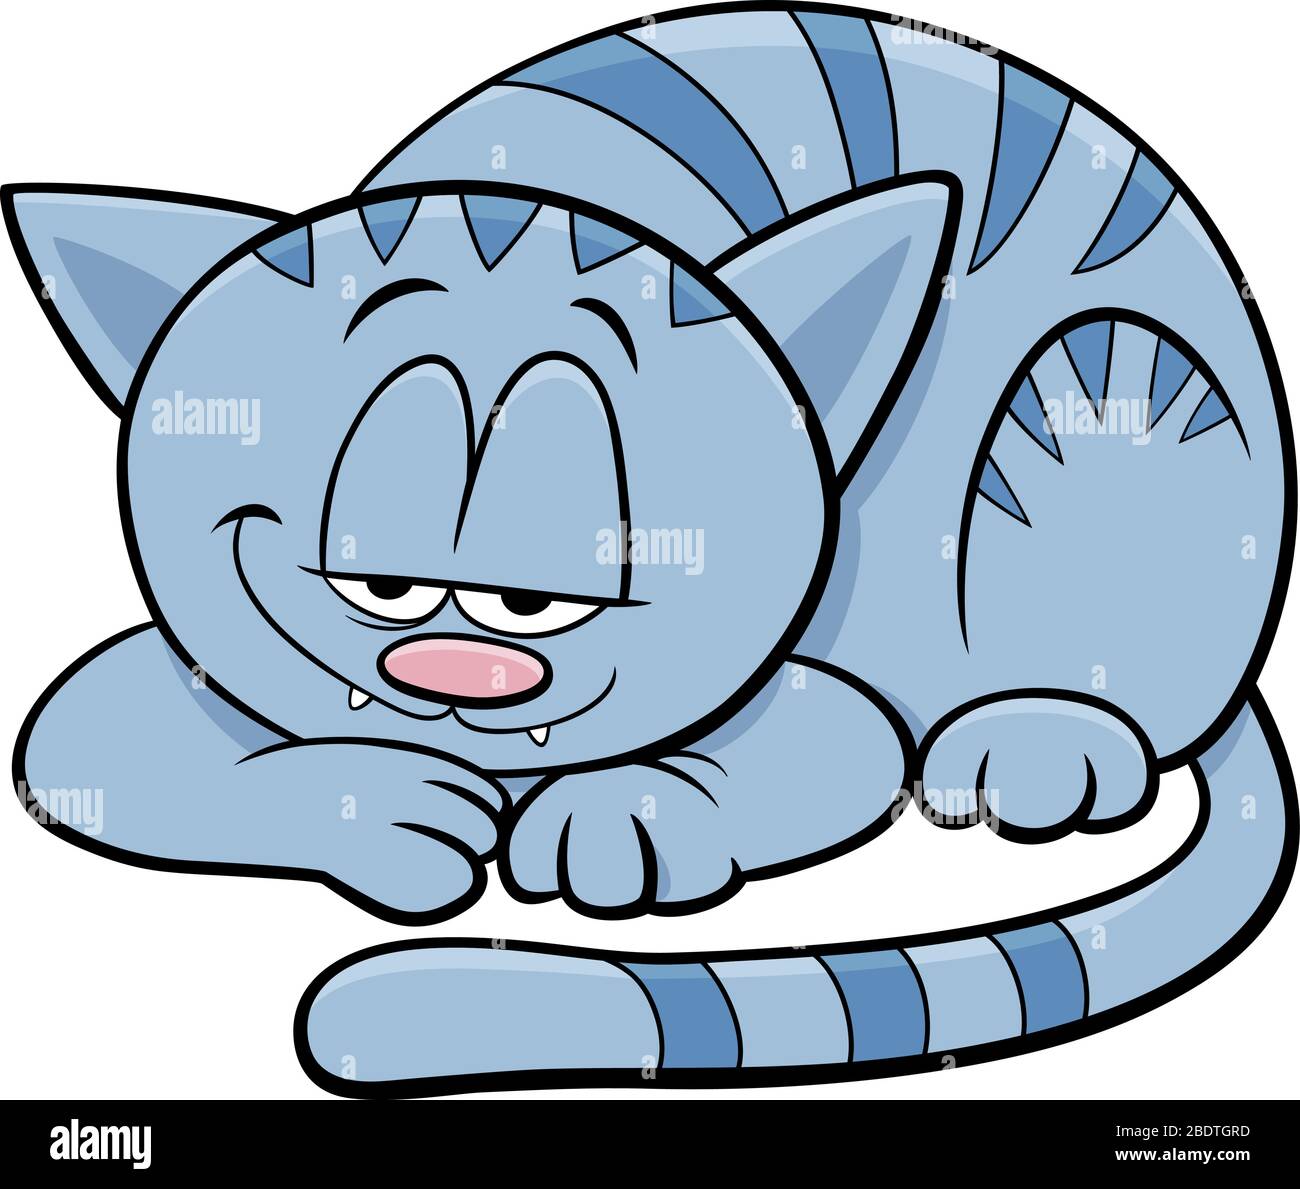 Cartoon Illustration of Funny Sleepy Cat or Kitten Comic Animal Character  Stock Vector Image & Art - Alamy